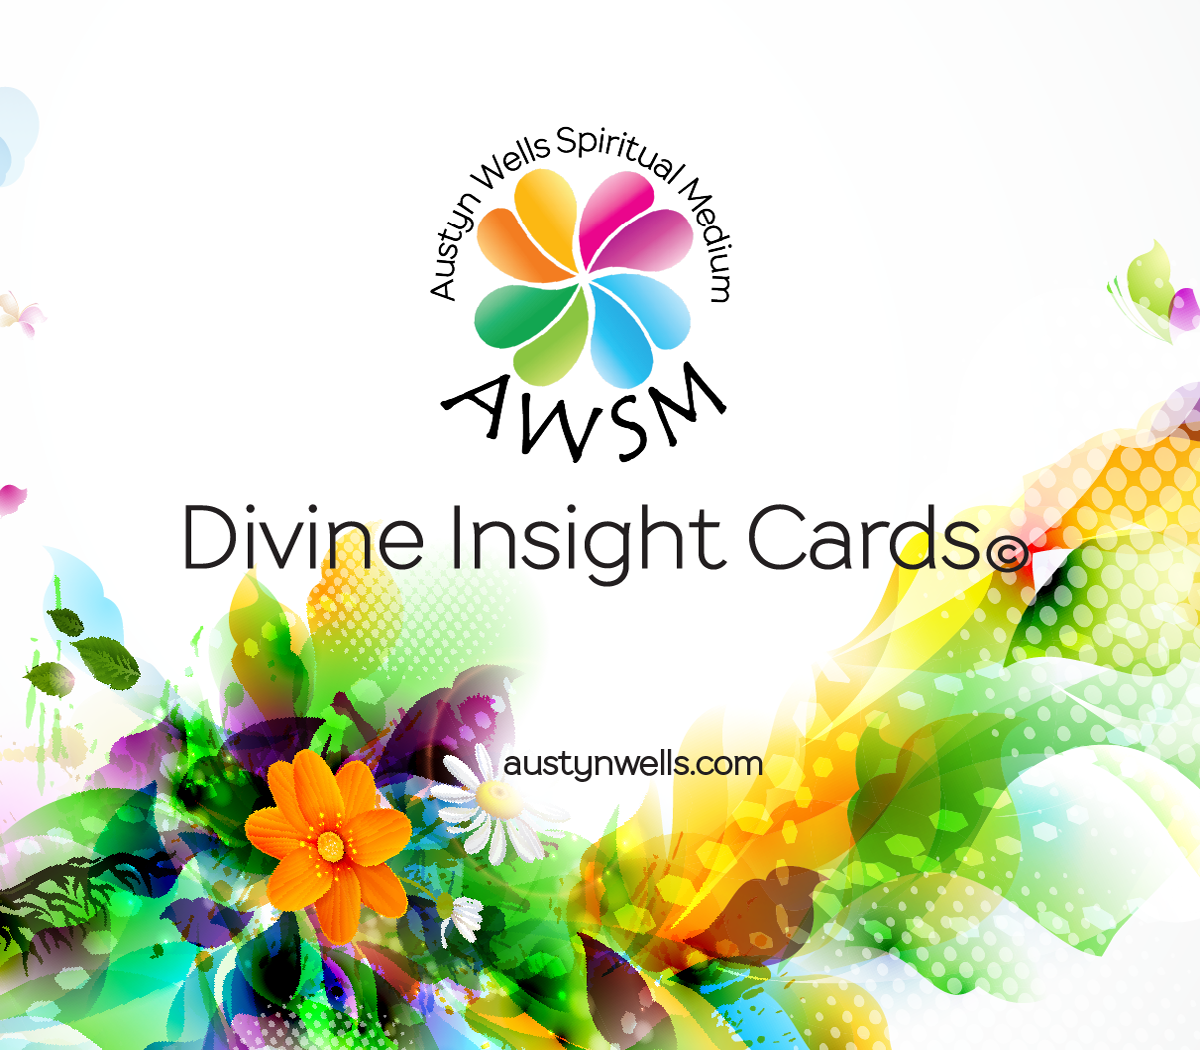 Divine Insight Cards